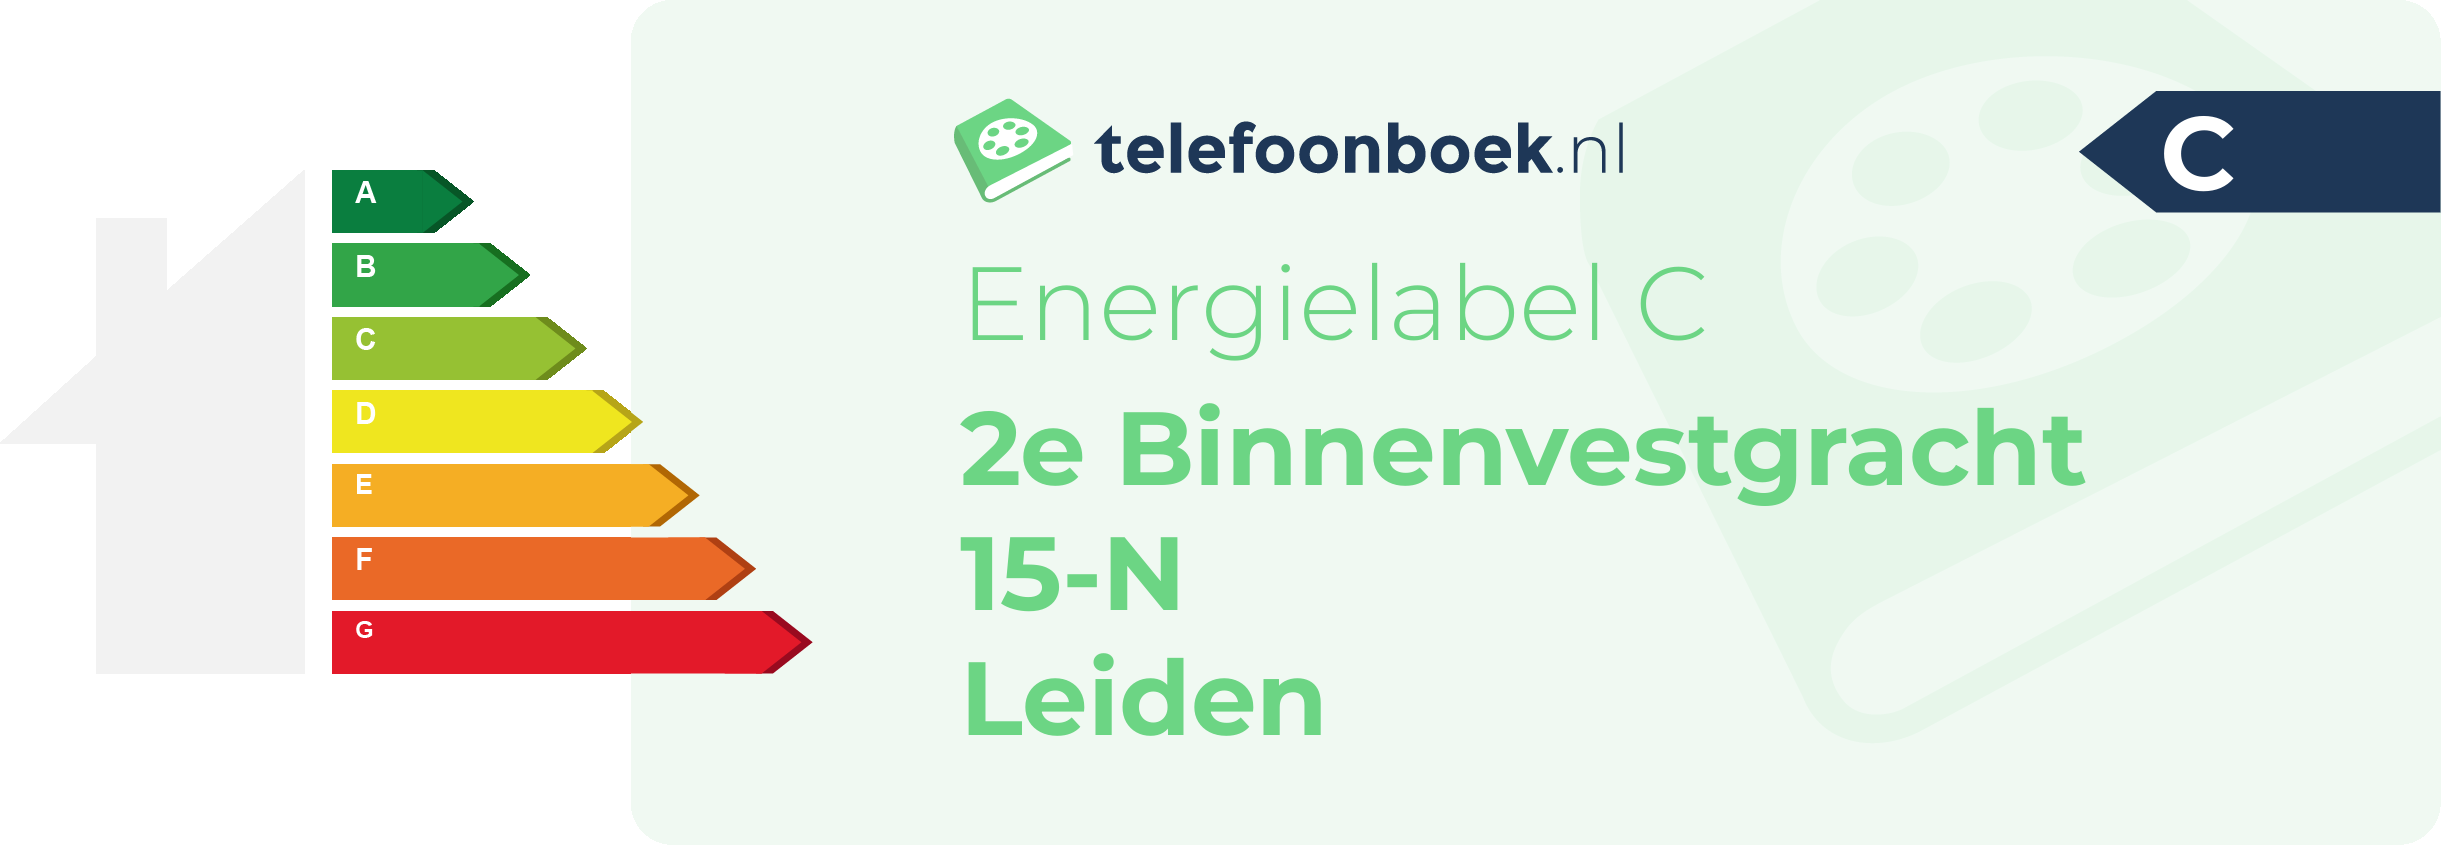 Energielabel 2e Binnenvestgracht 15-N Leiden